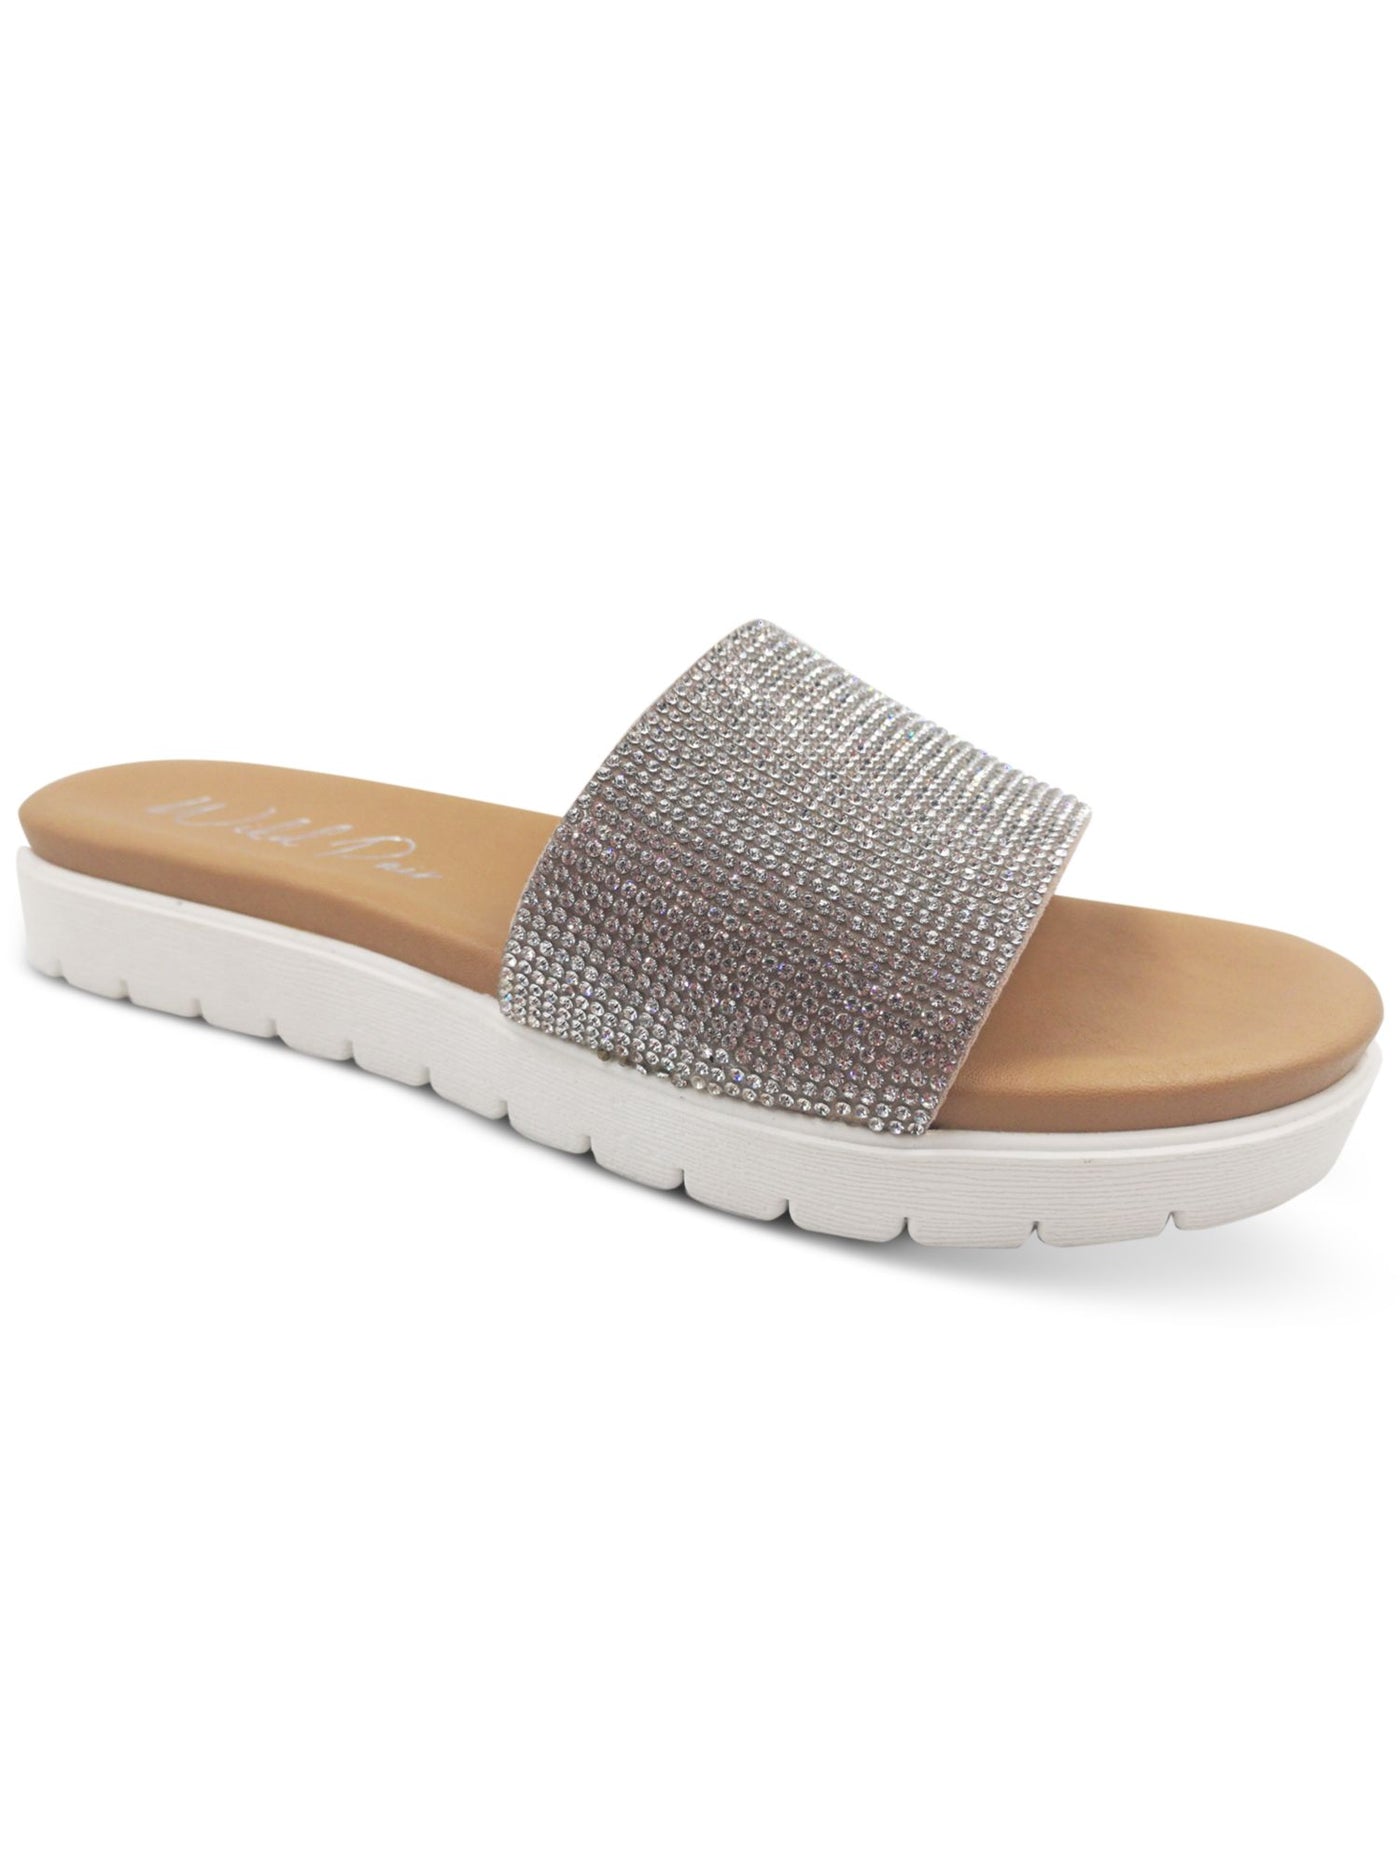 WILD PAIR Womens Silver Stone Embellishment Safirah Round Toe Slip On Slide Sandals Shoes 6 M